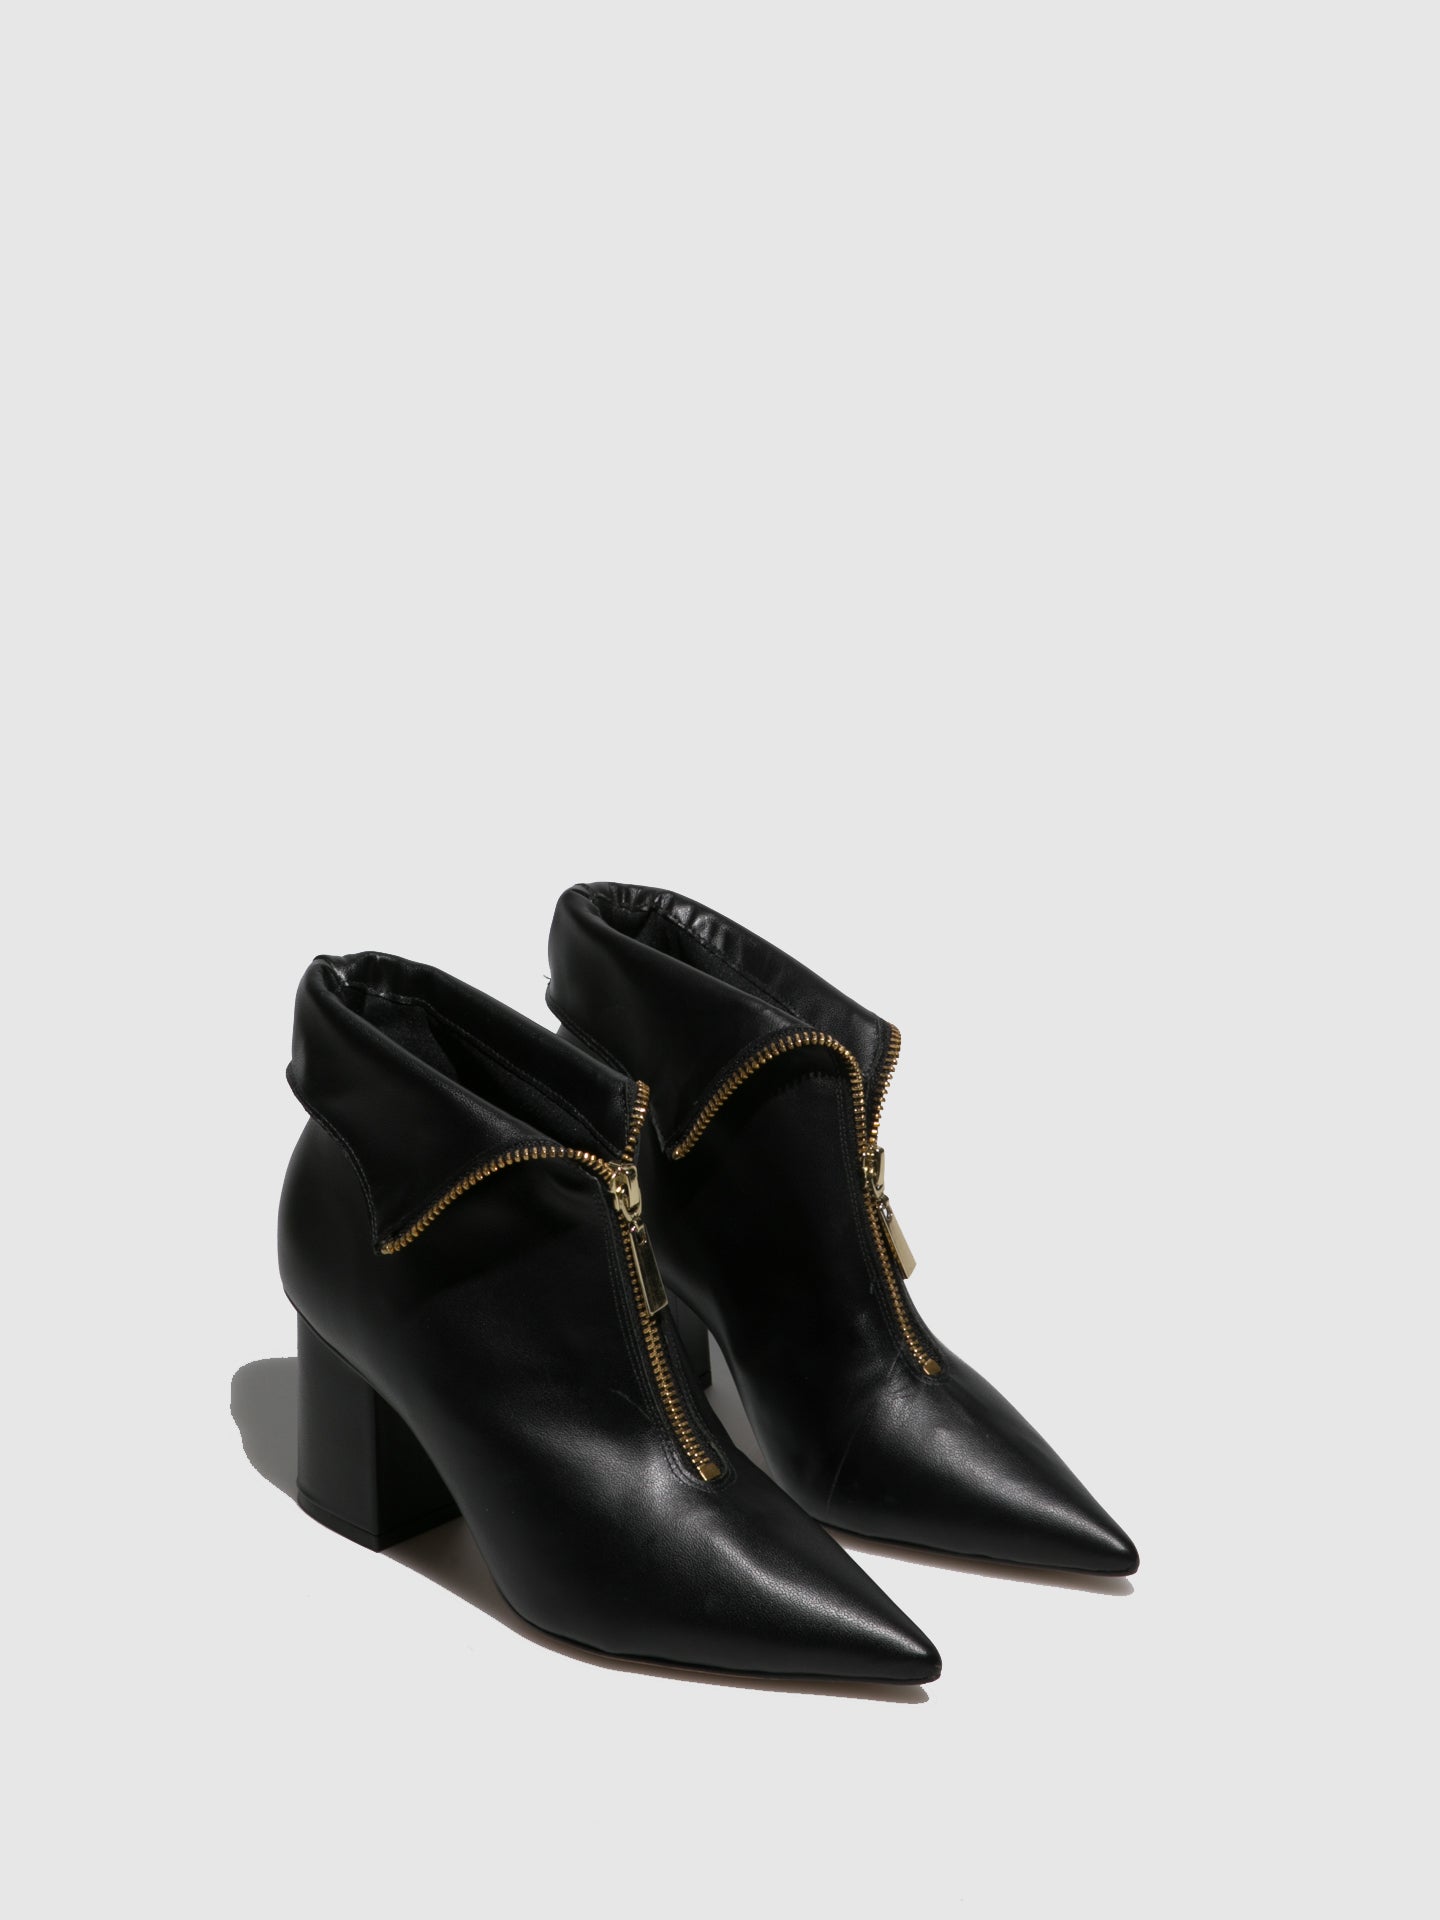 Parodi Passion Black Pointed Toe Boots